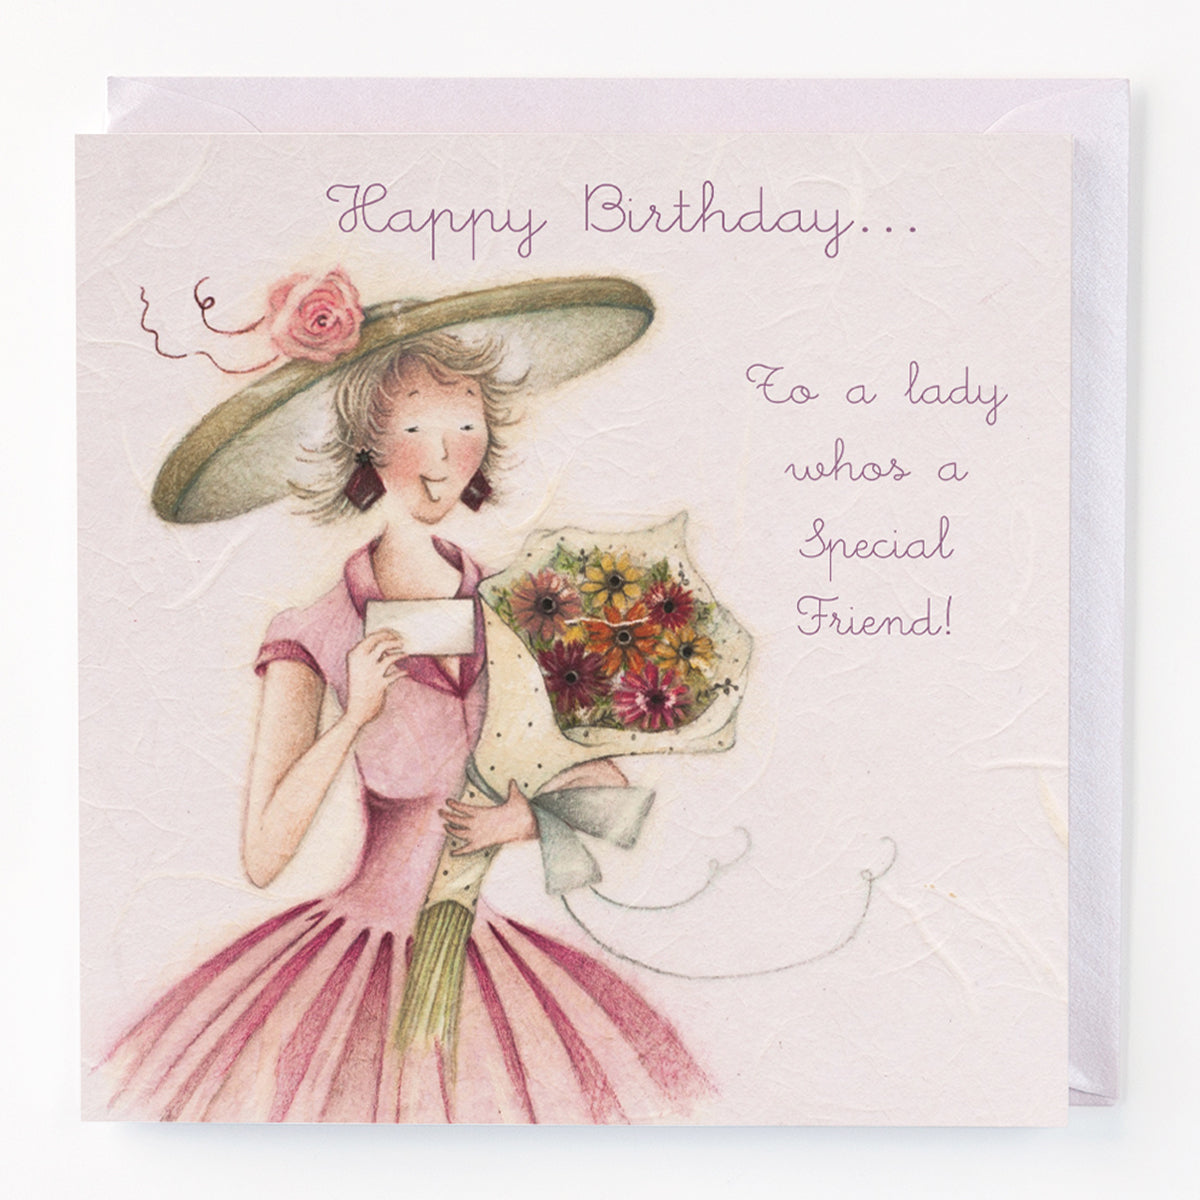 Happy birthday Card for a Lady